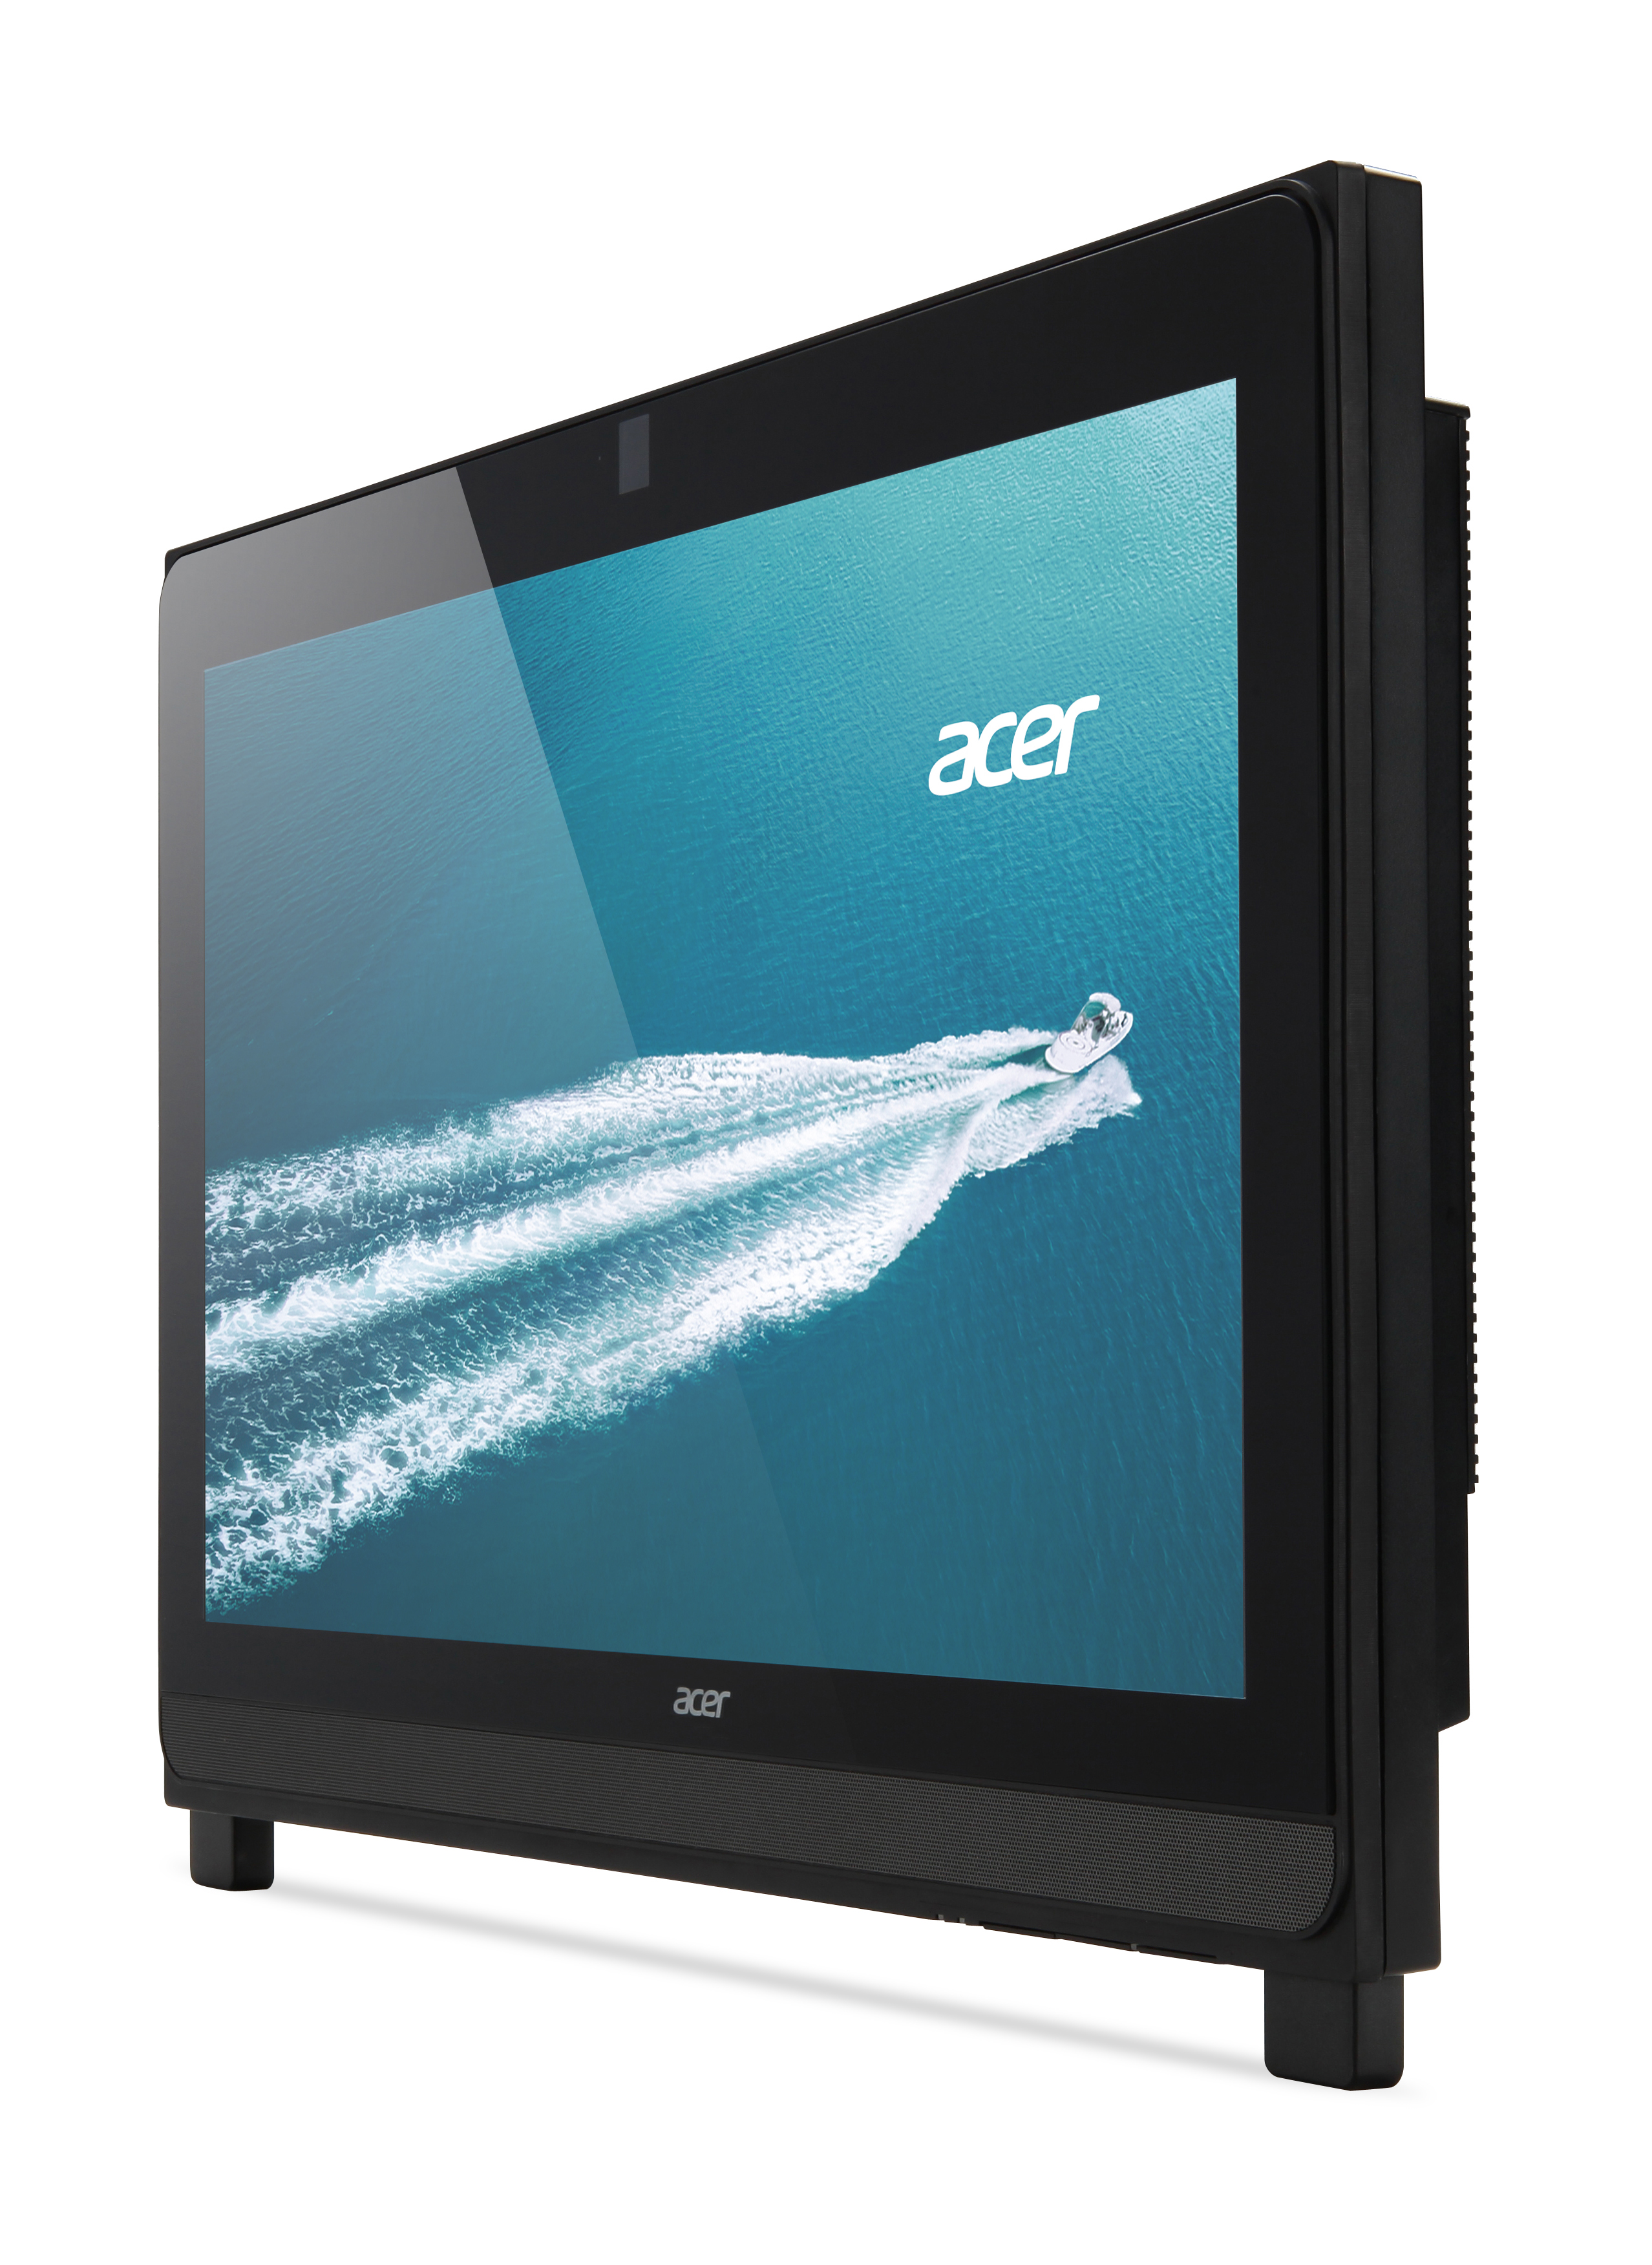 New Acer Veriton Z2660G AiO delivers comfortable ergonomics in a low maintenance platform.